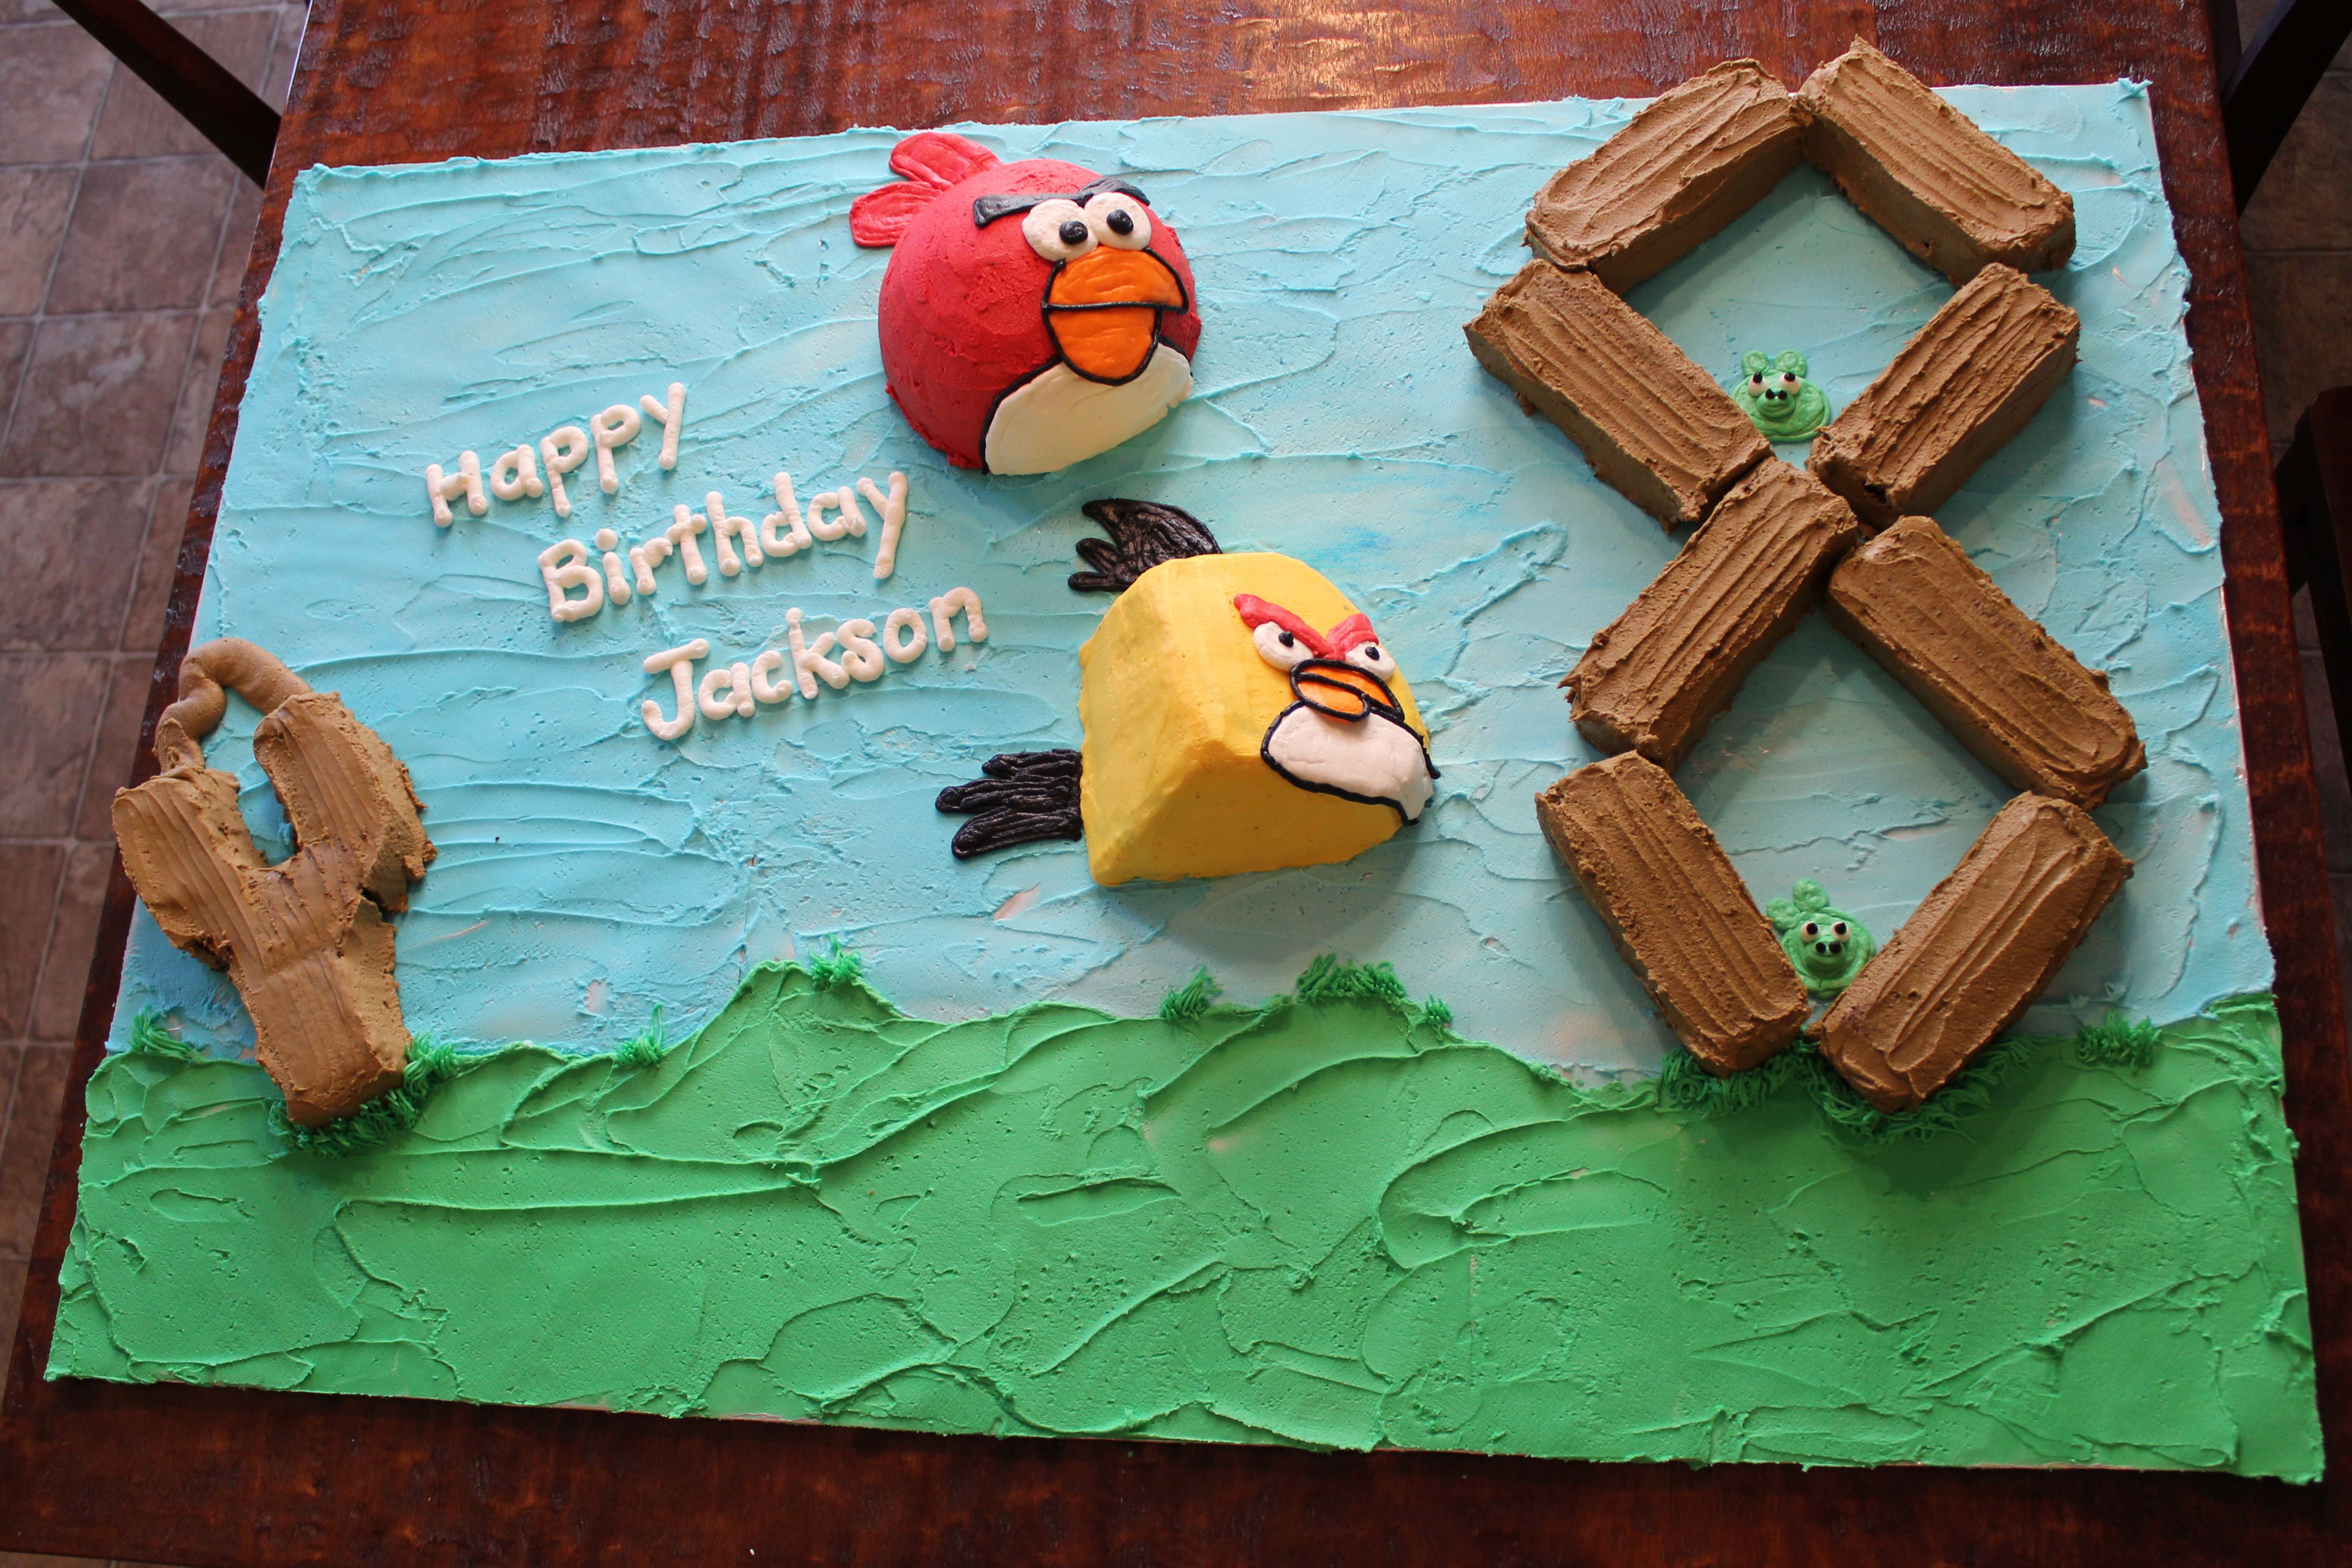 Angry Birds Cake Ideas